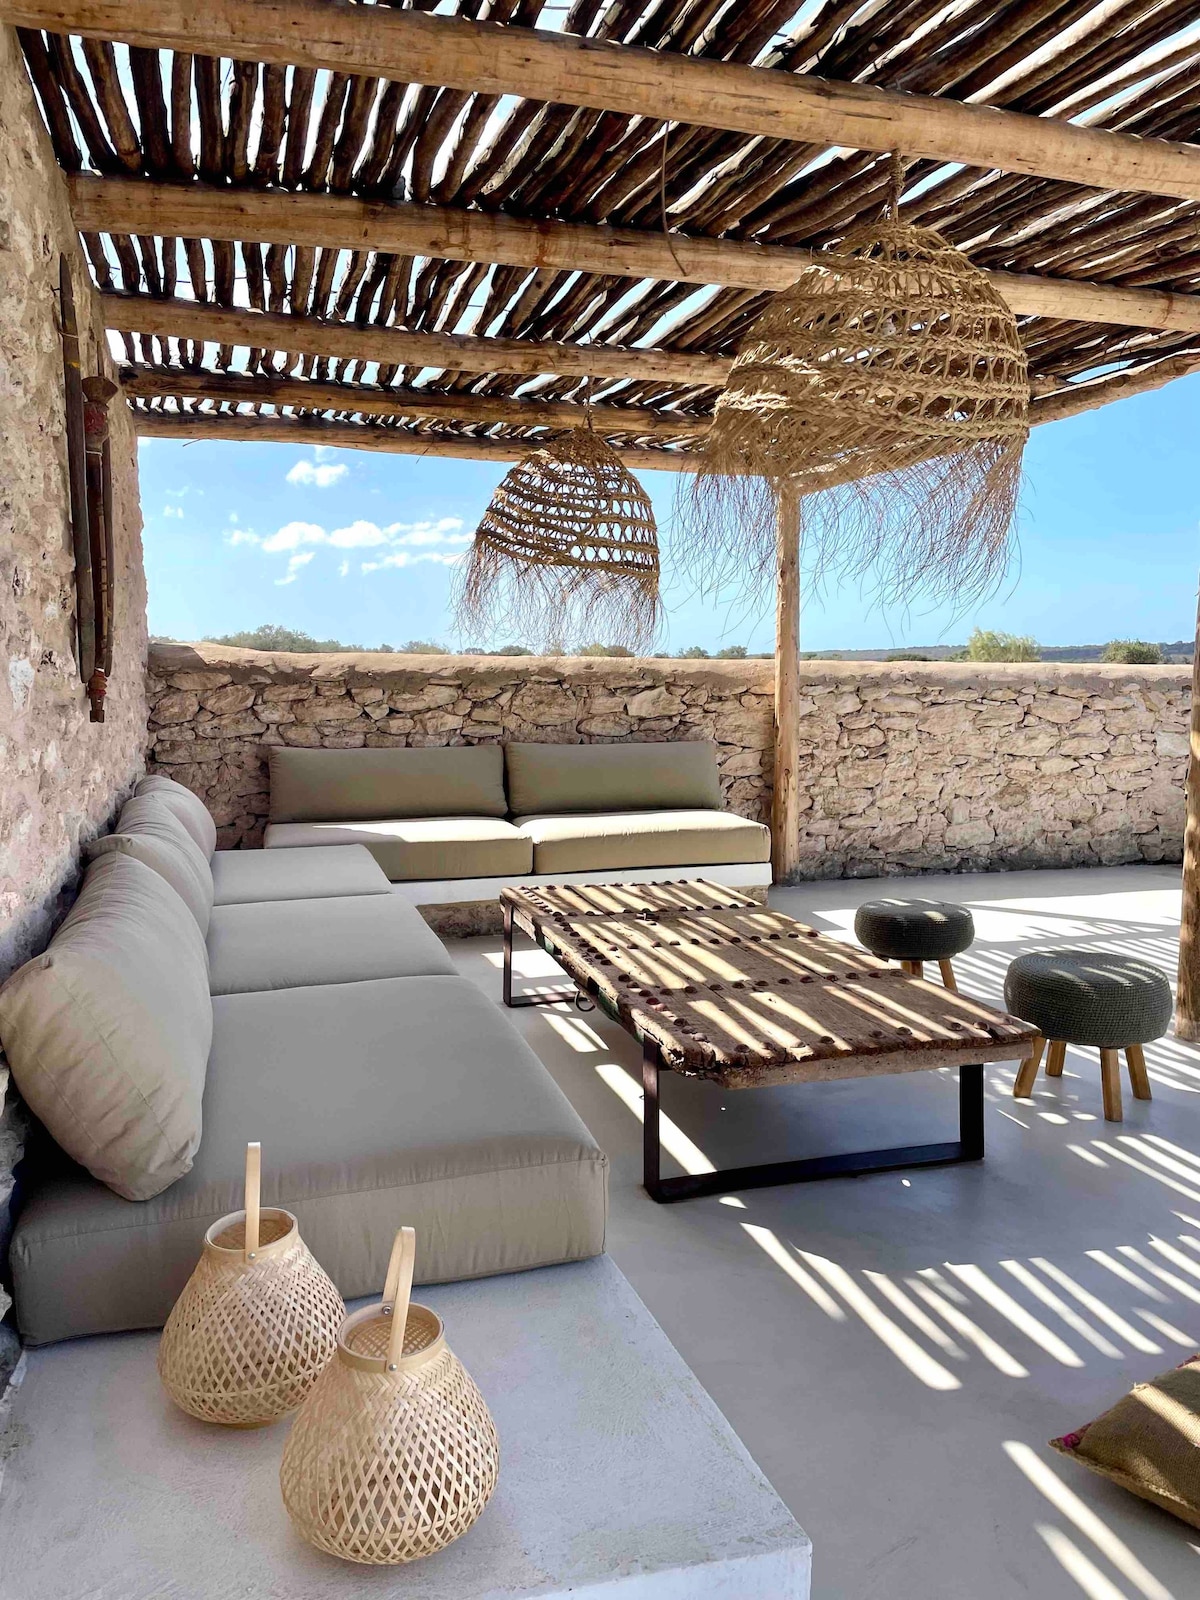 DARKOUM - Villas for Rent in Ghazoua, Marrakesh-Safi, Morocco - Airbnb